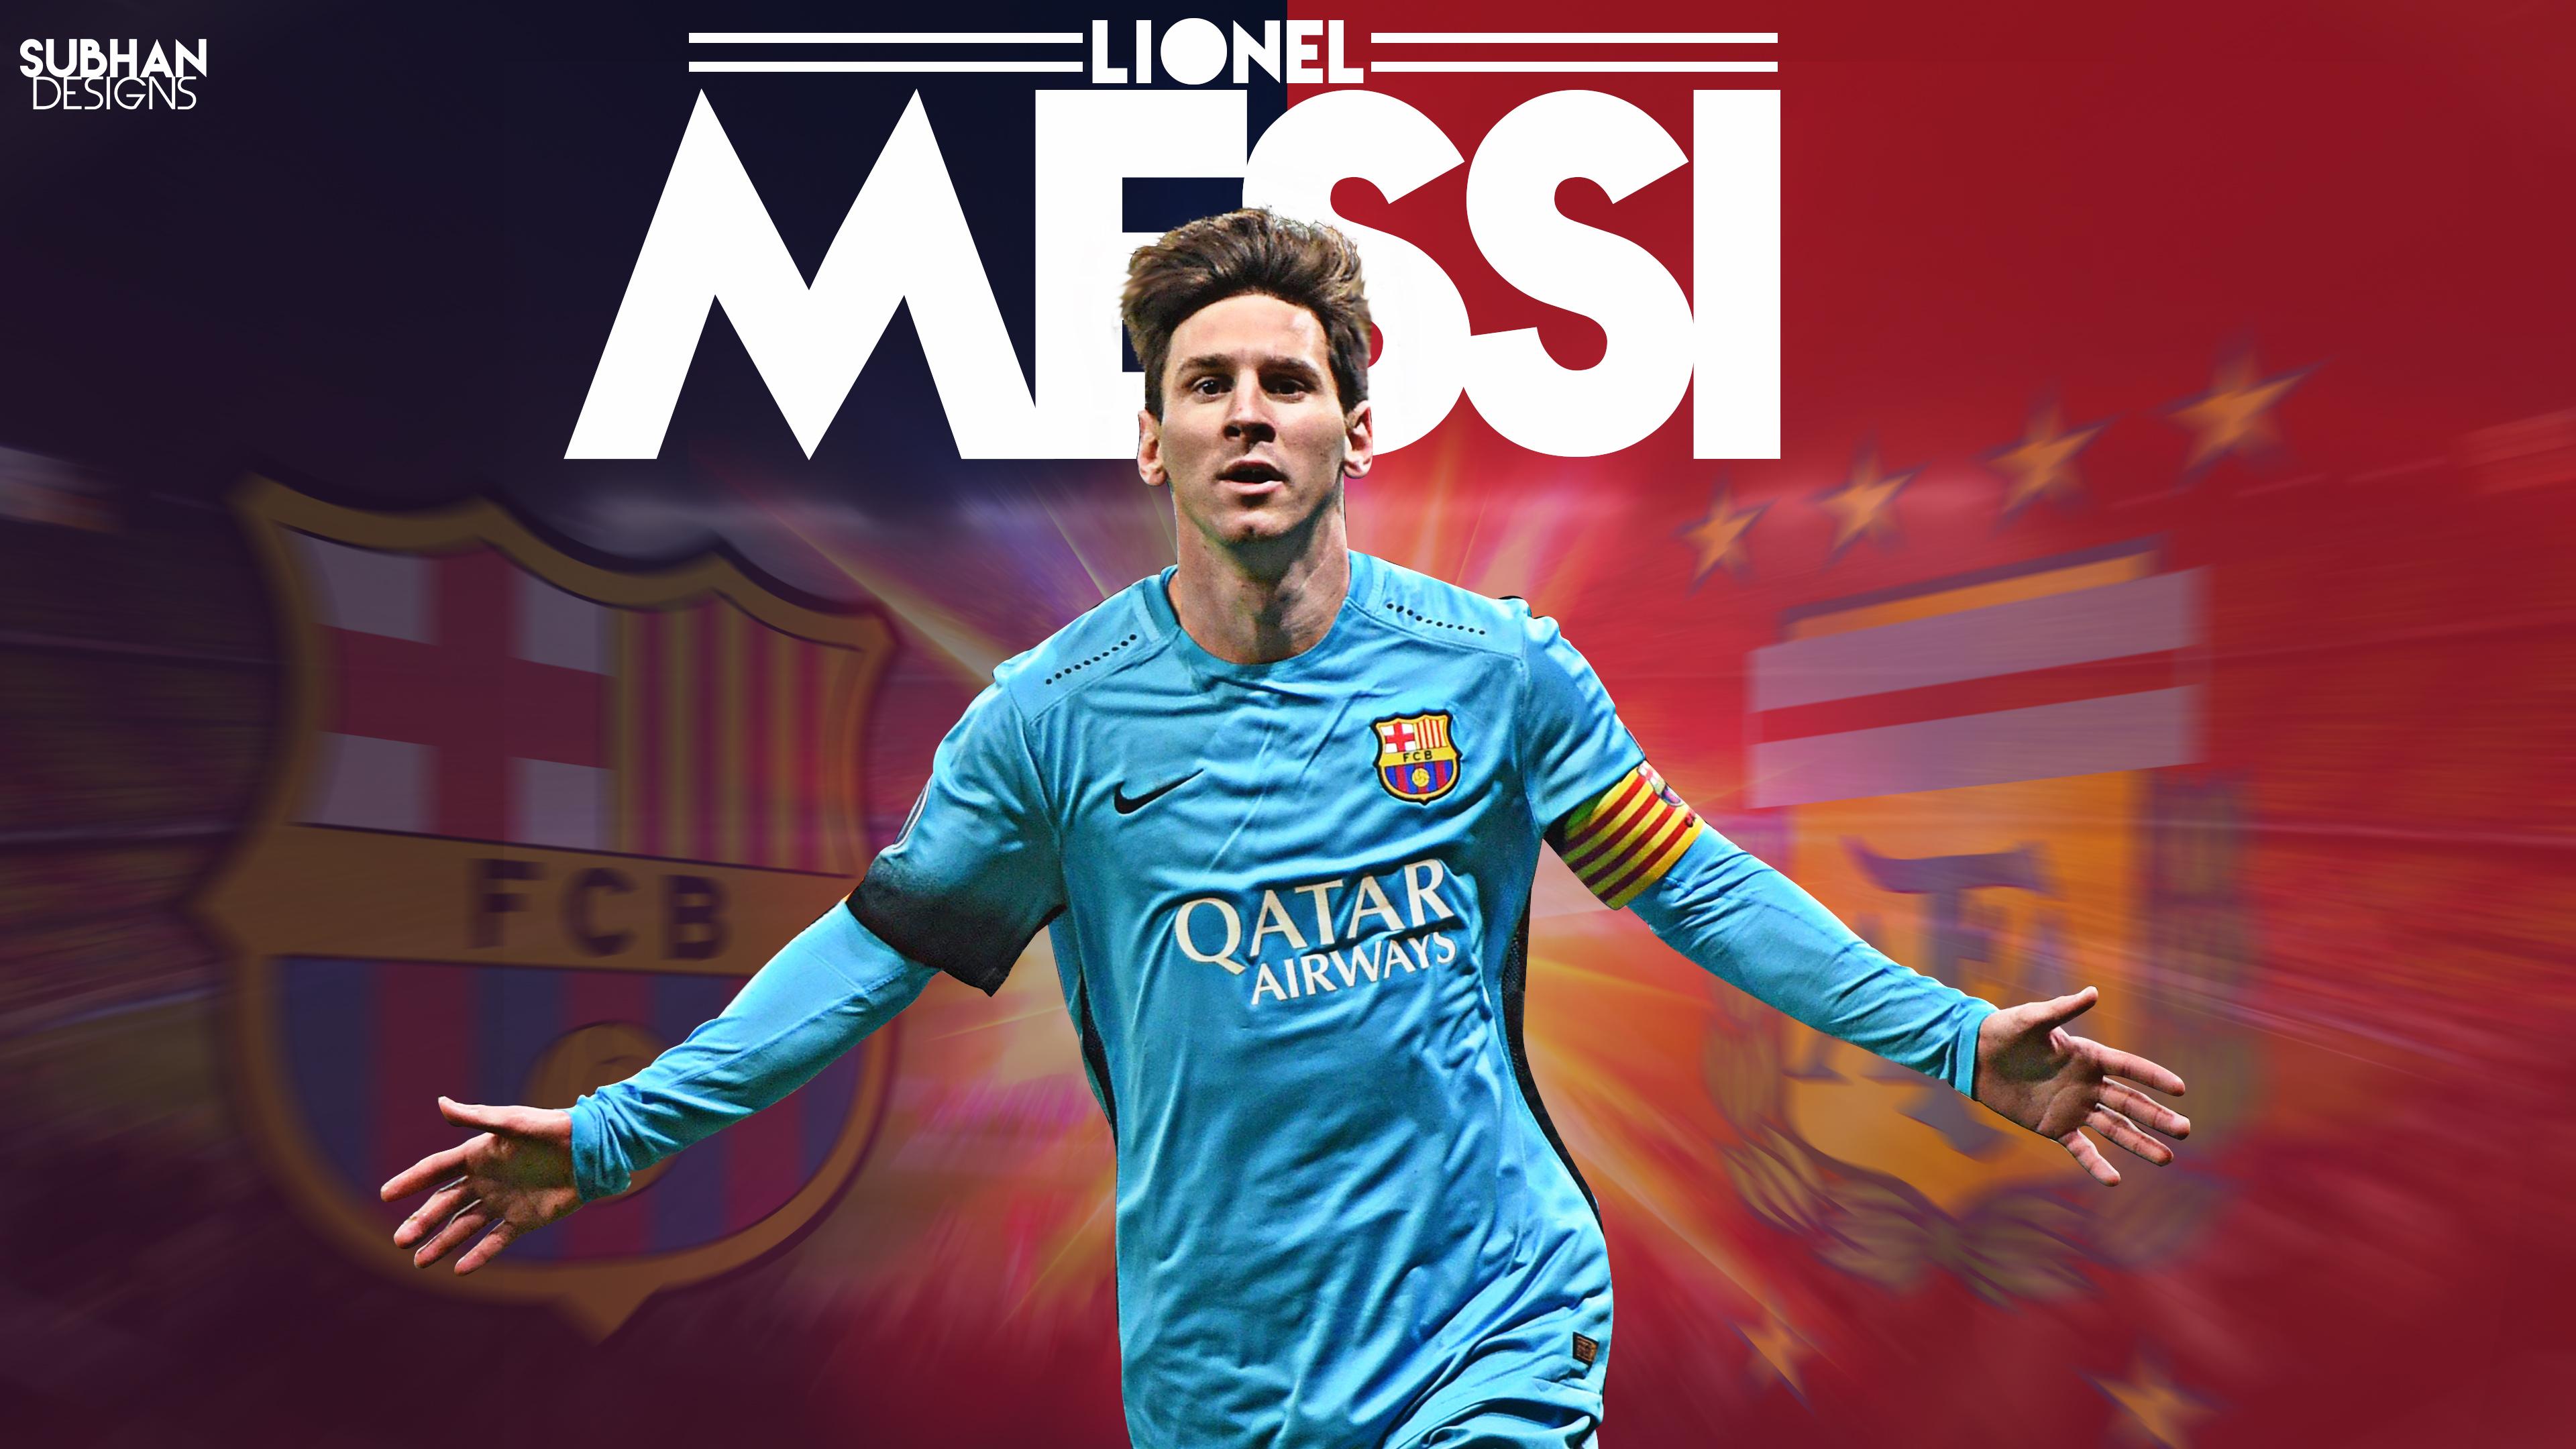 3840 x 2160 · jpeg - Lionel Messi 2016 wallpaper 4K by subhan22 on DeviantArt